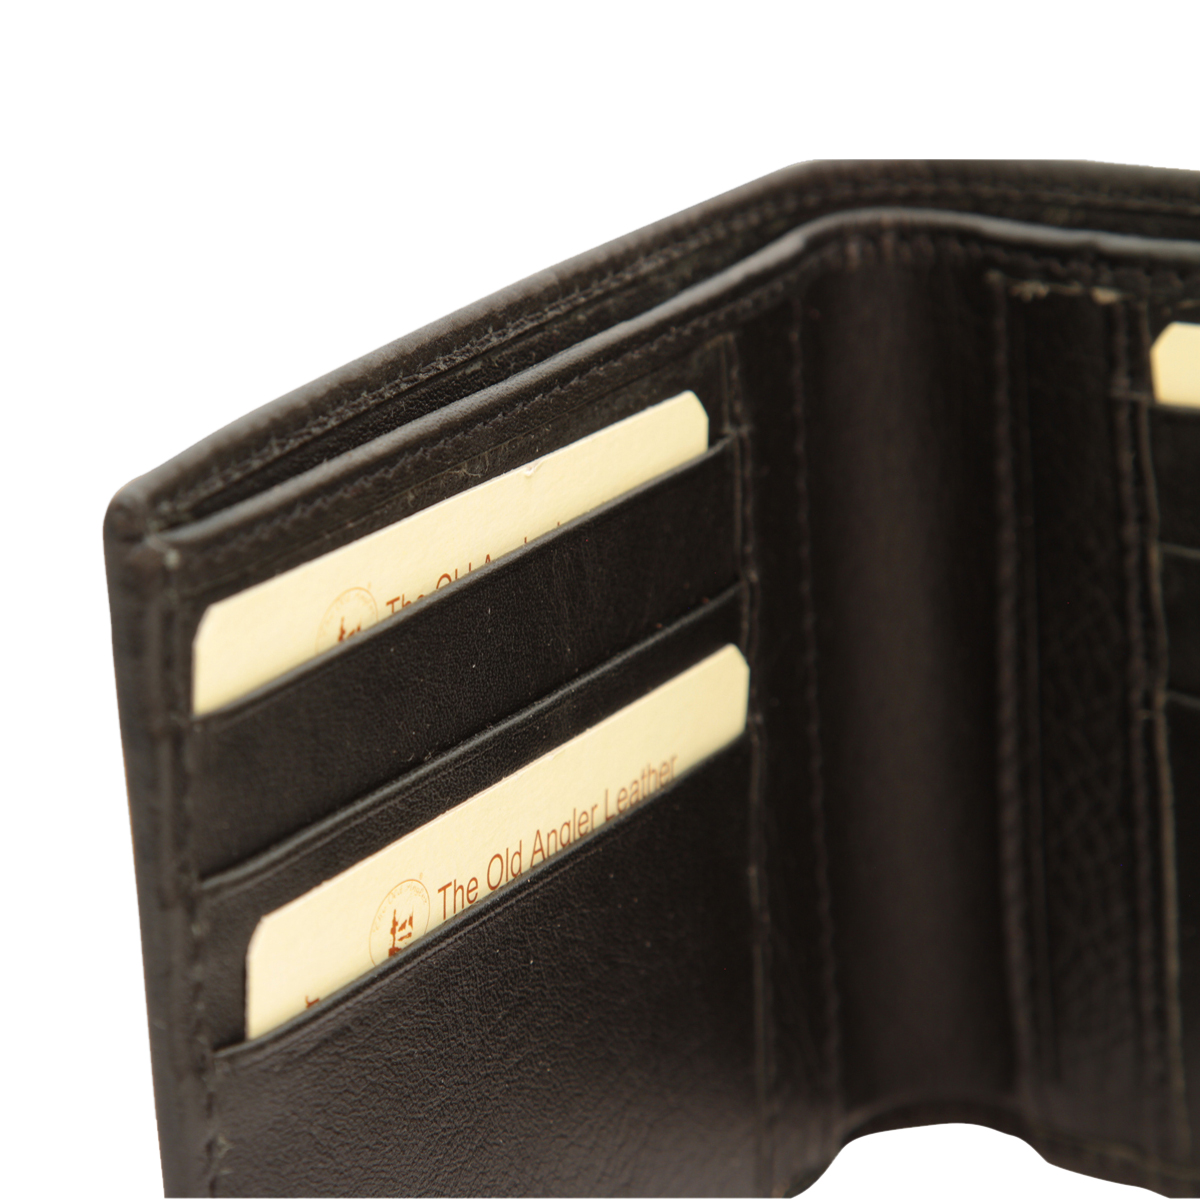 Leather bifold wallet - black | 800989NE UK | Old Angler Firenze